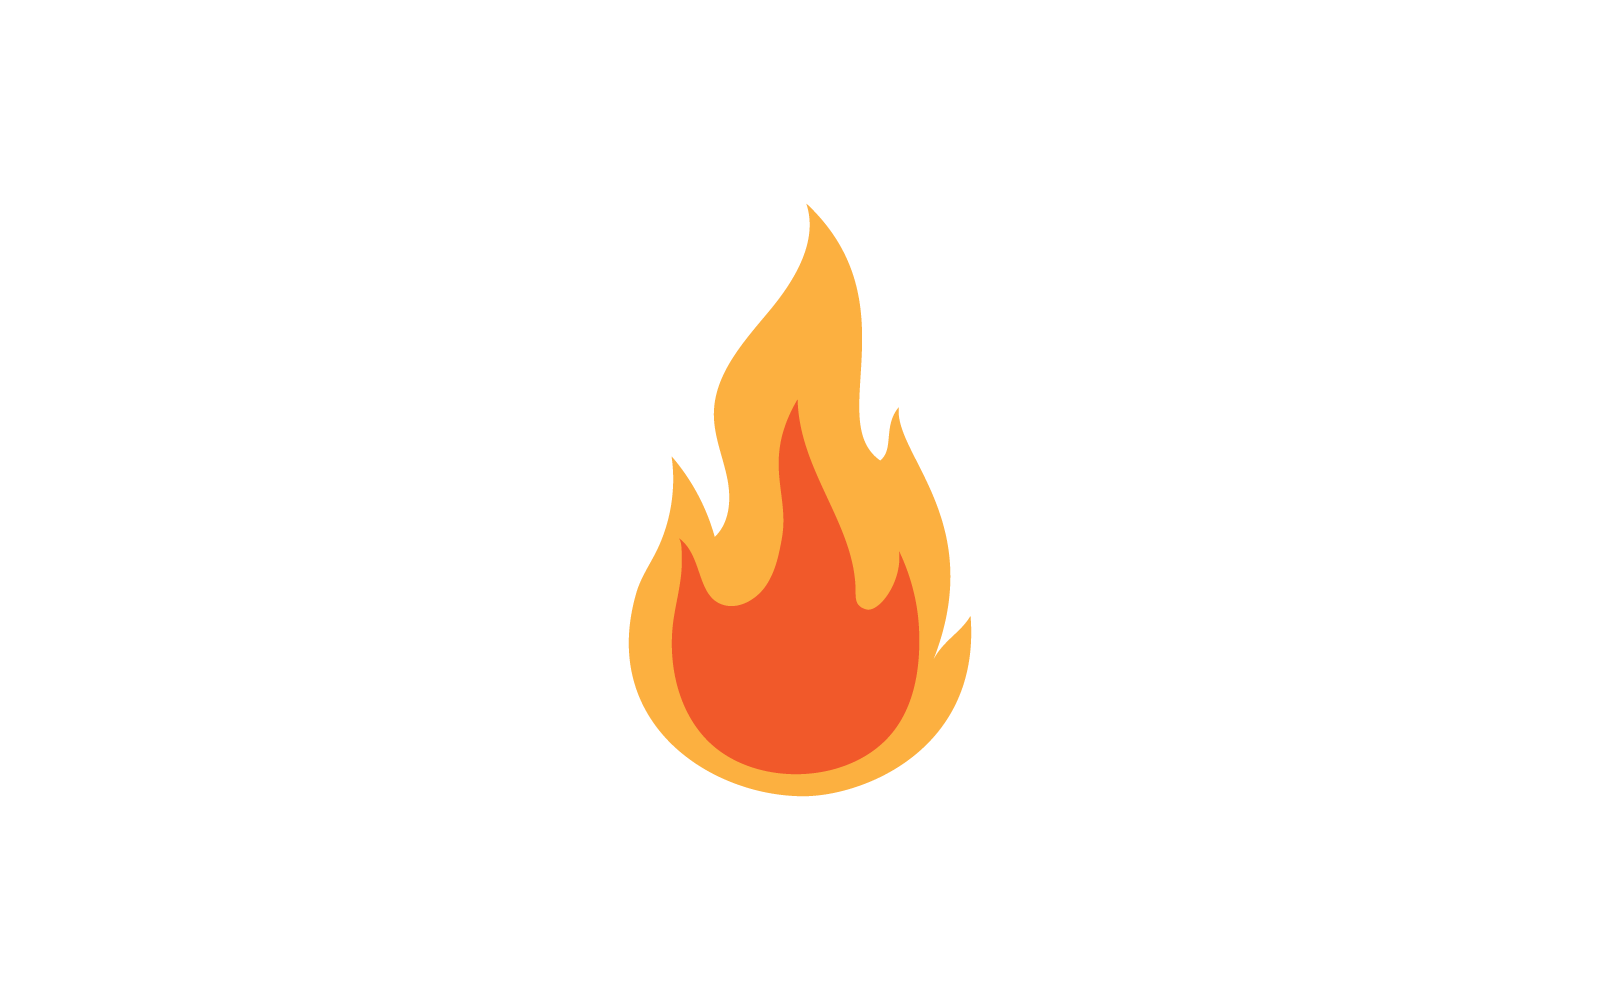 Fire flame Logo vector, Oil, gas and energy concept Logo Template